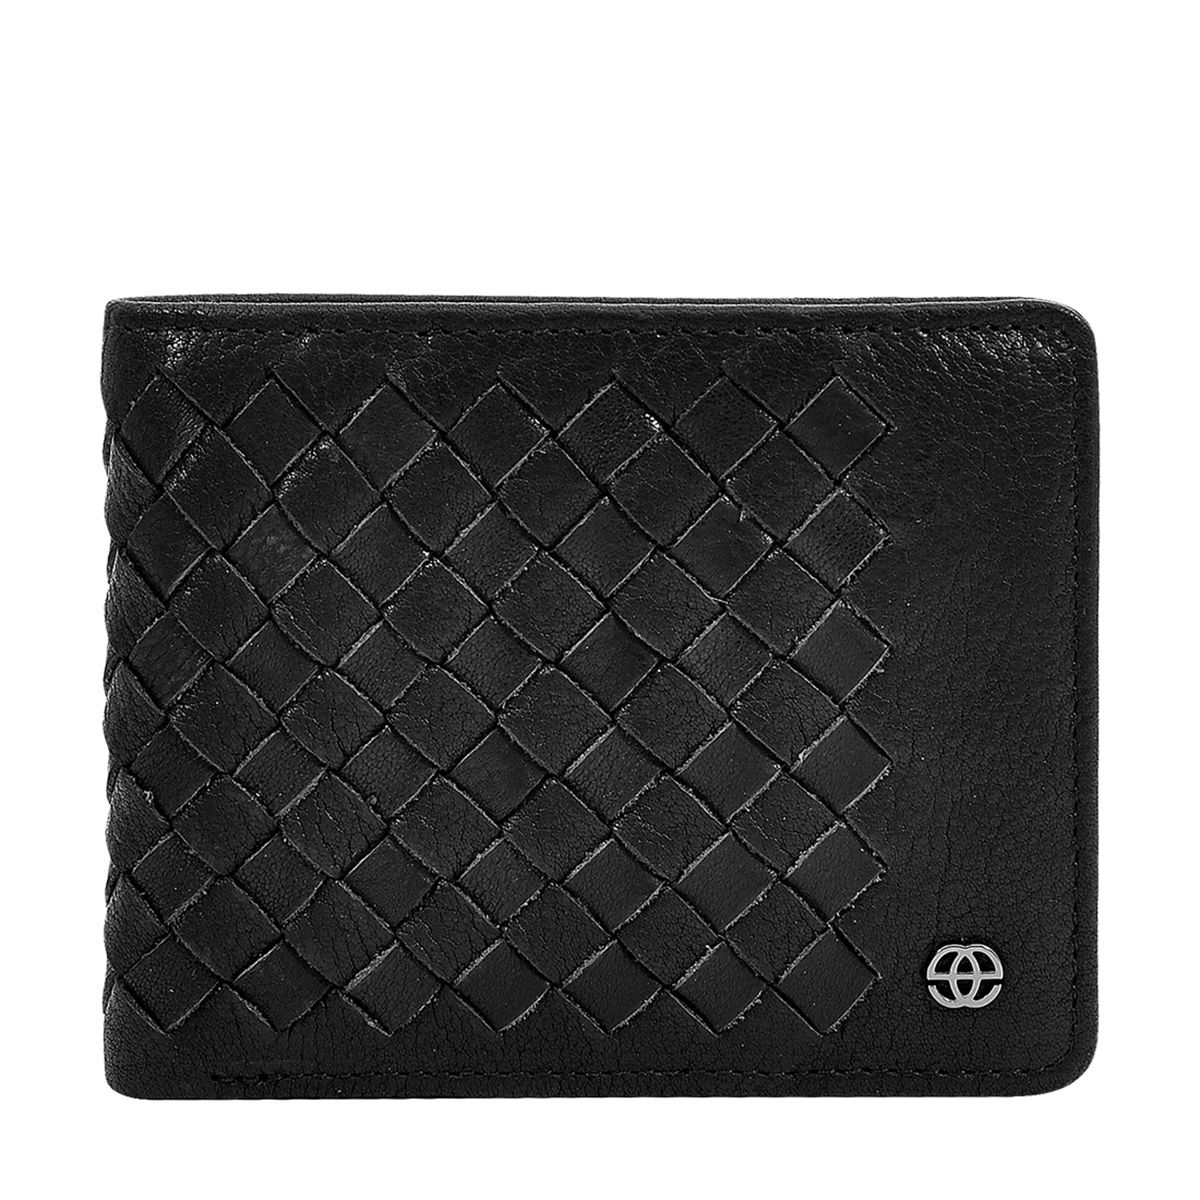 Eske Paris Adolf Bi-Fold Leather Men's Wallet with 3 Card Slots, RFID Protected, Tornedo Black